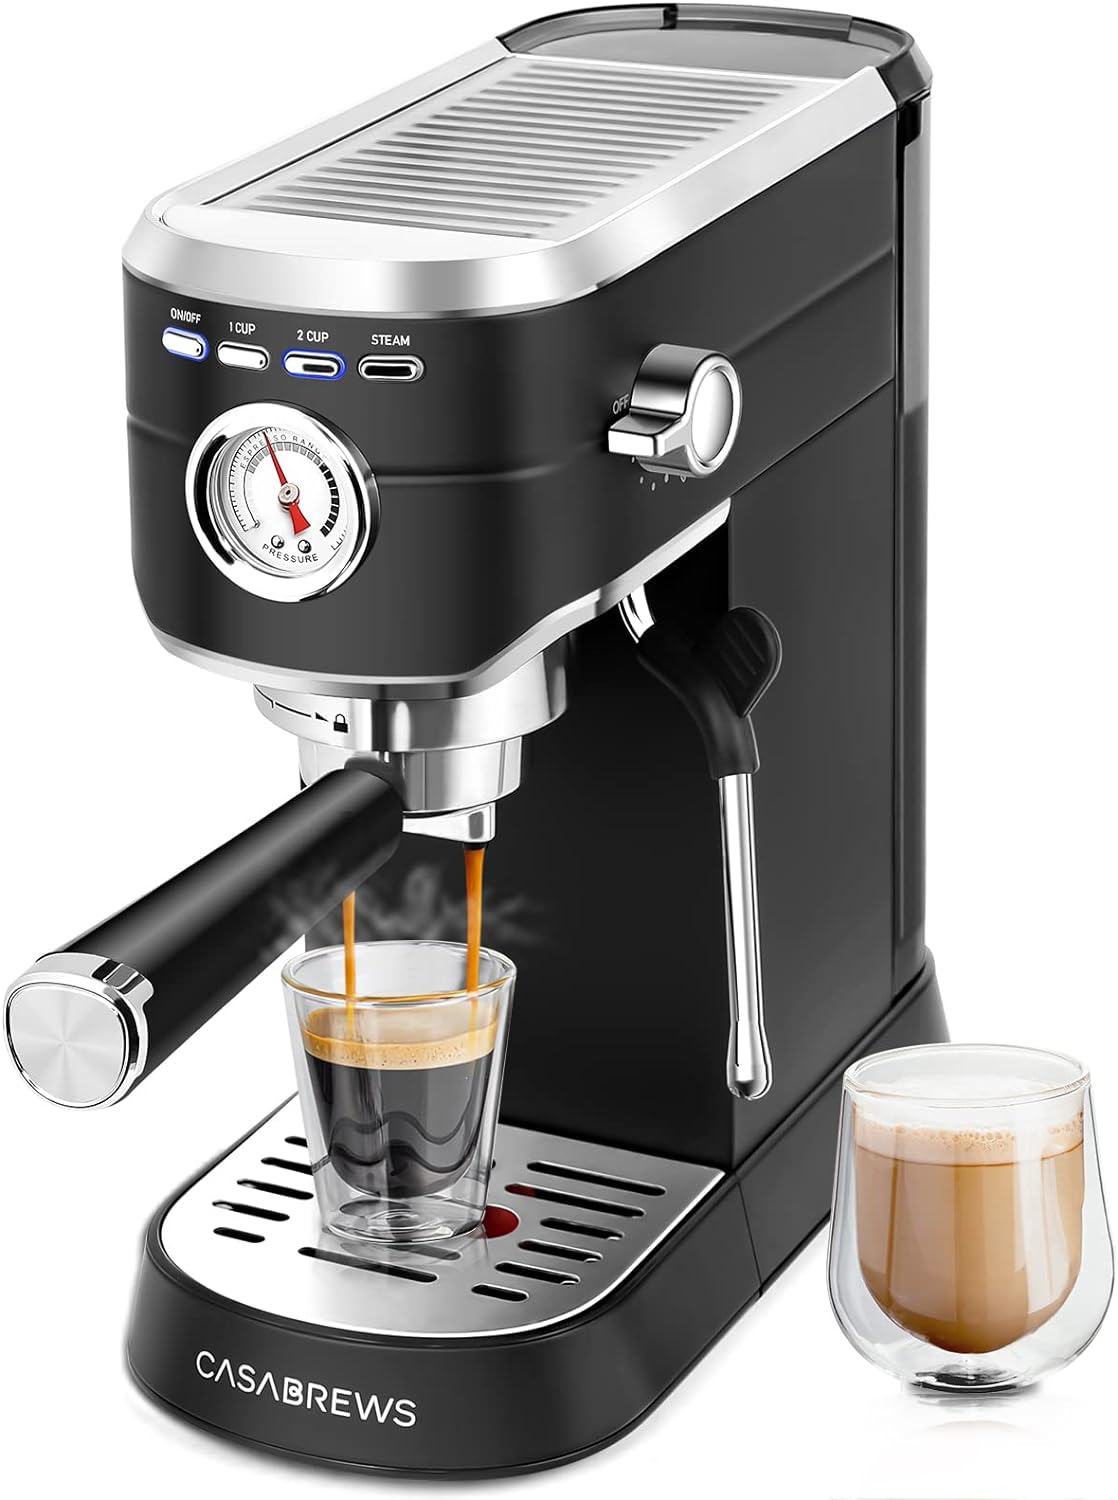 CASABREWS Espresso Machine 20 Bar, Espresso Maker with Milk Frother Steam Wand, Stainless Steel Espresso Coffee Machine with 34oz Removable Water Tank, Creamy